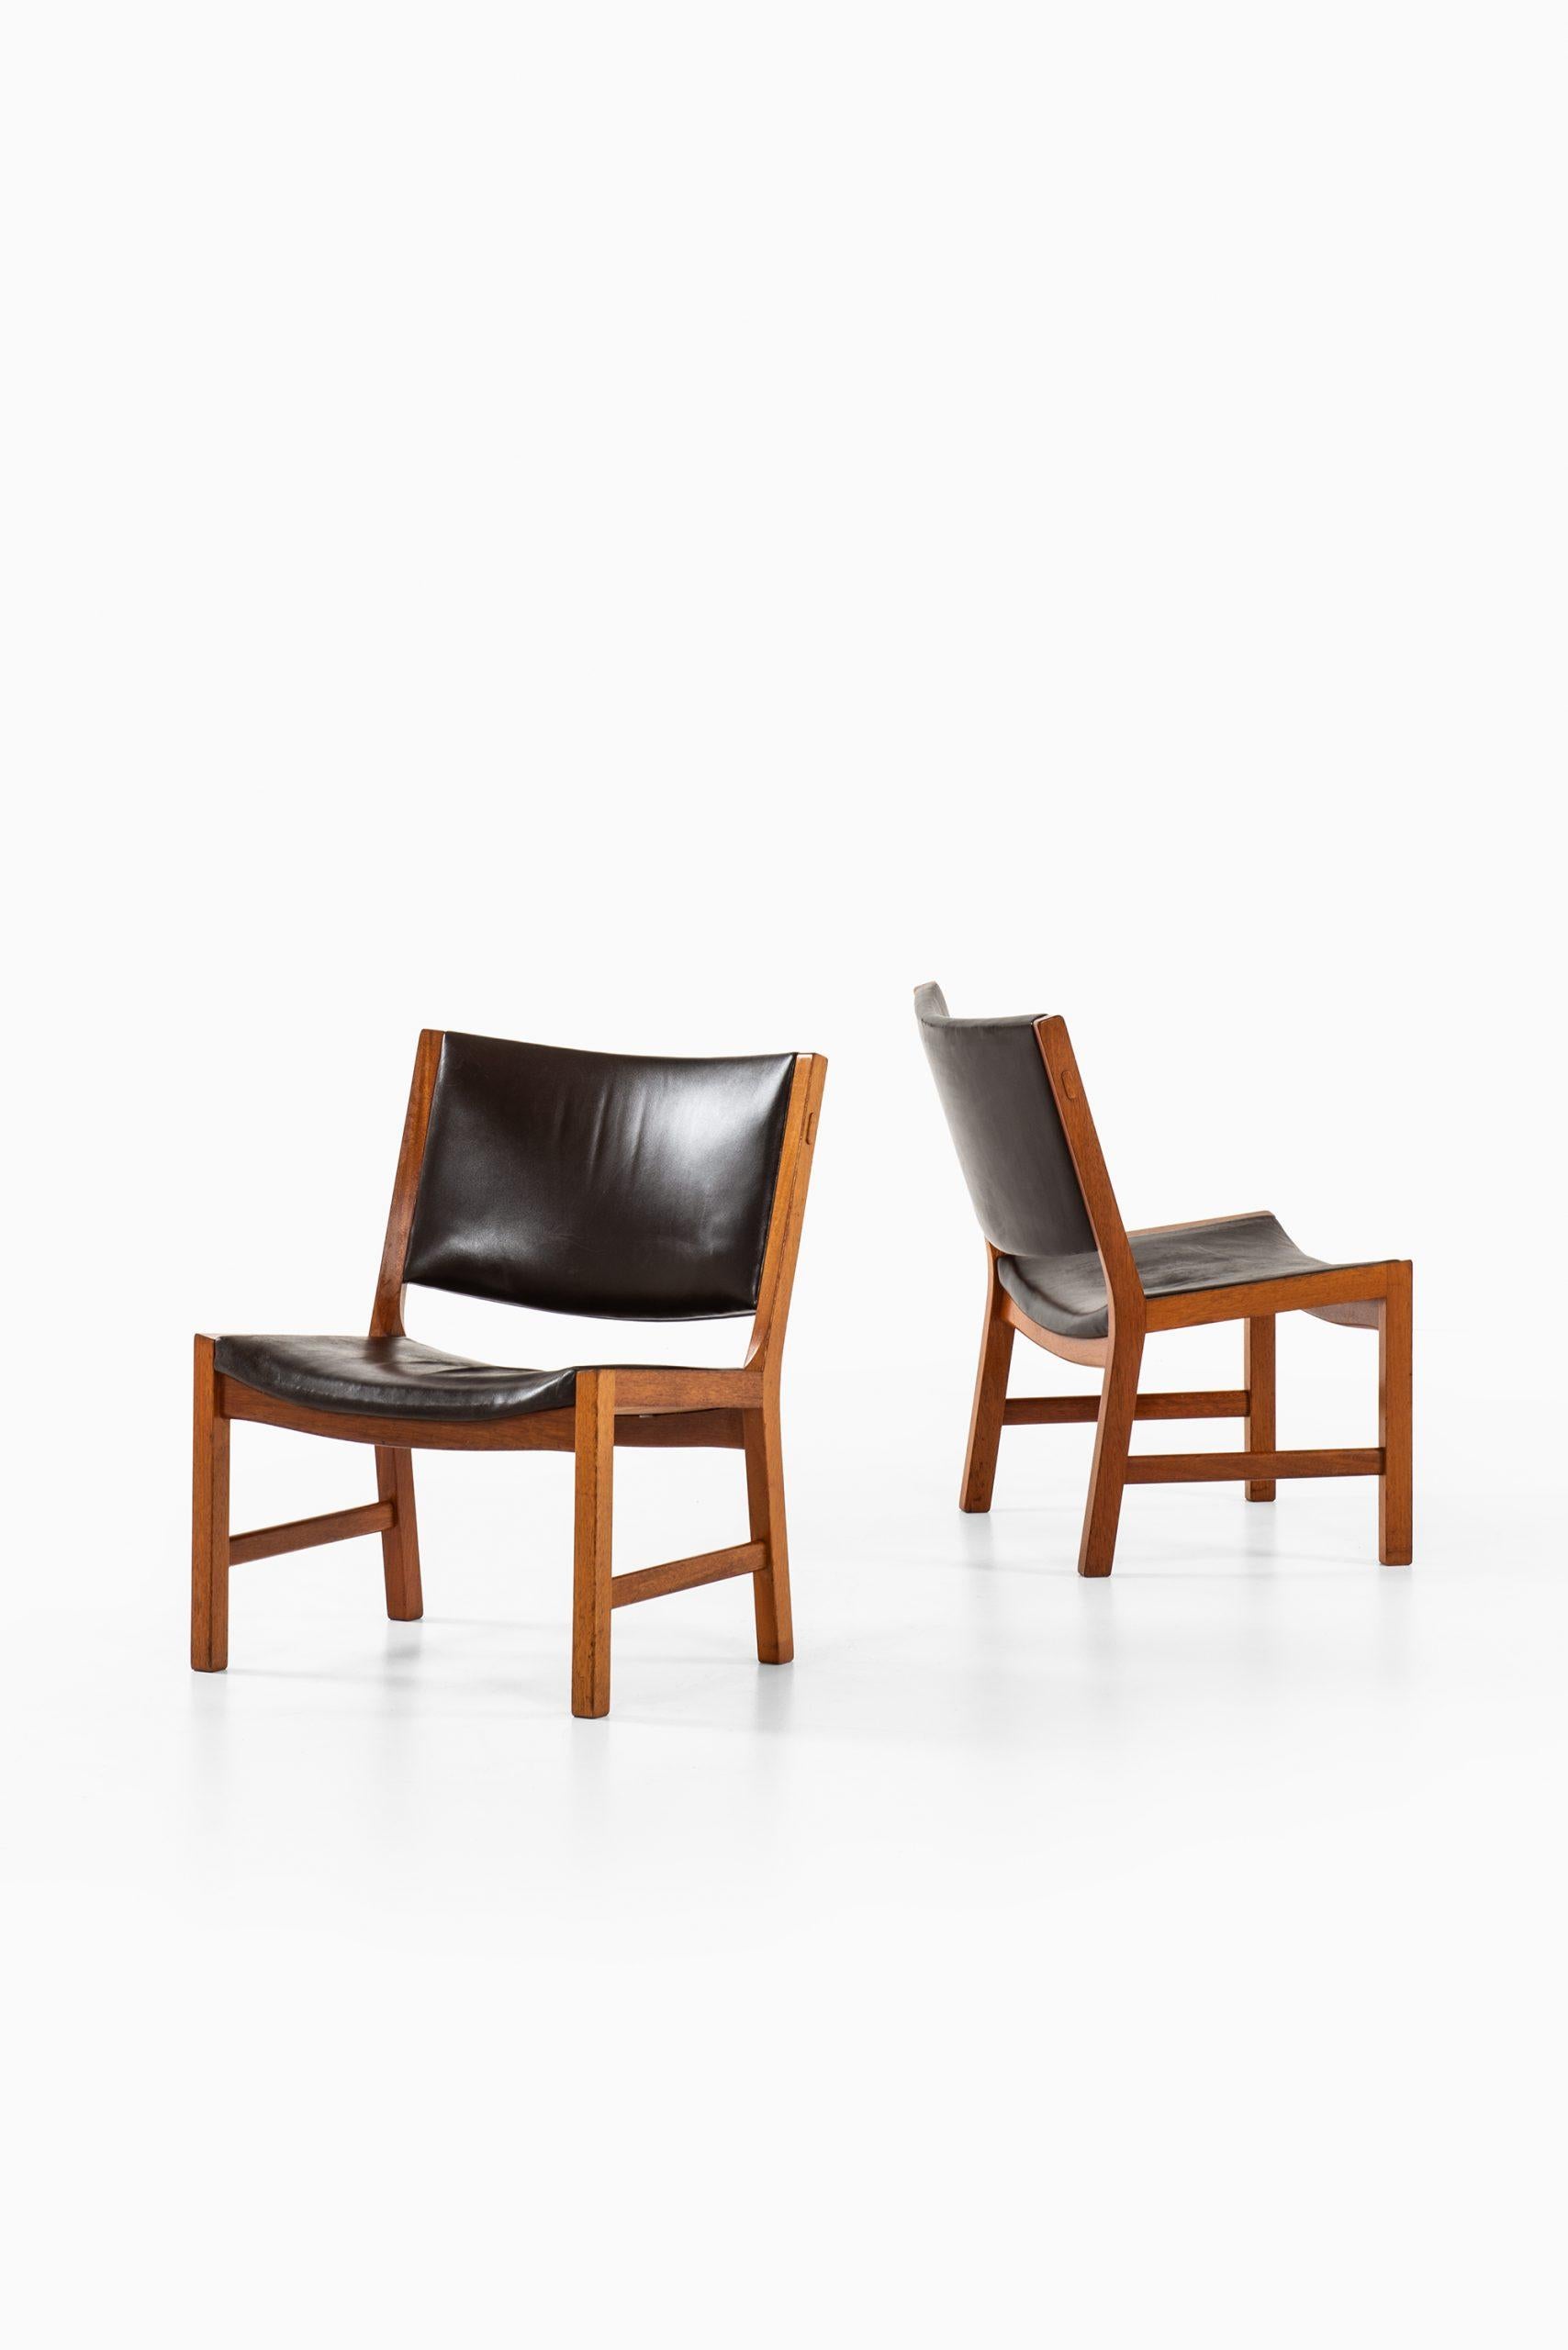 Rare pair of easy chairs model JH54 designed by Hans Wegner. Produced by cabinetmaker Johannes Hansen in Denmark.